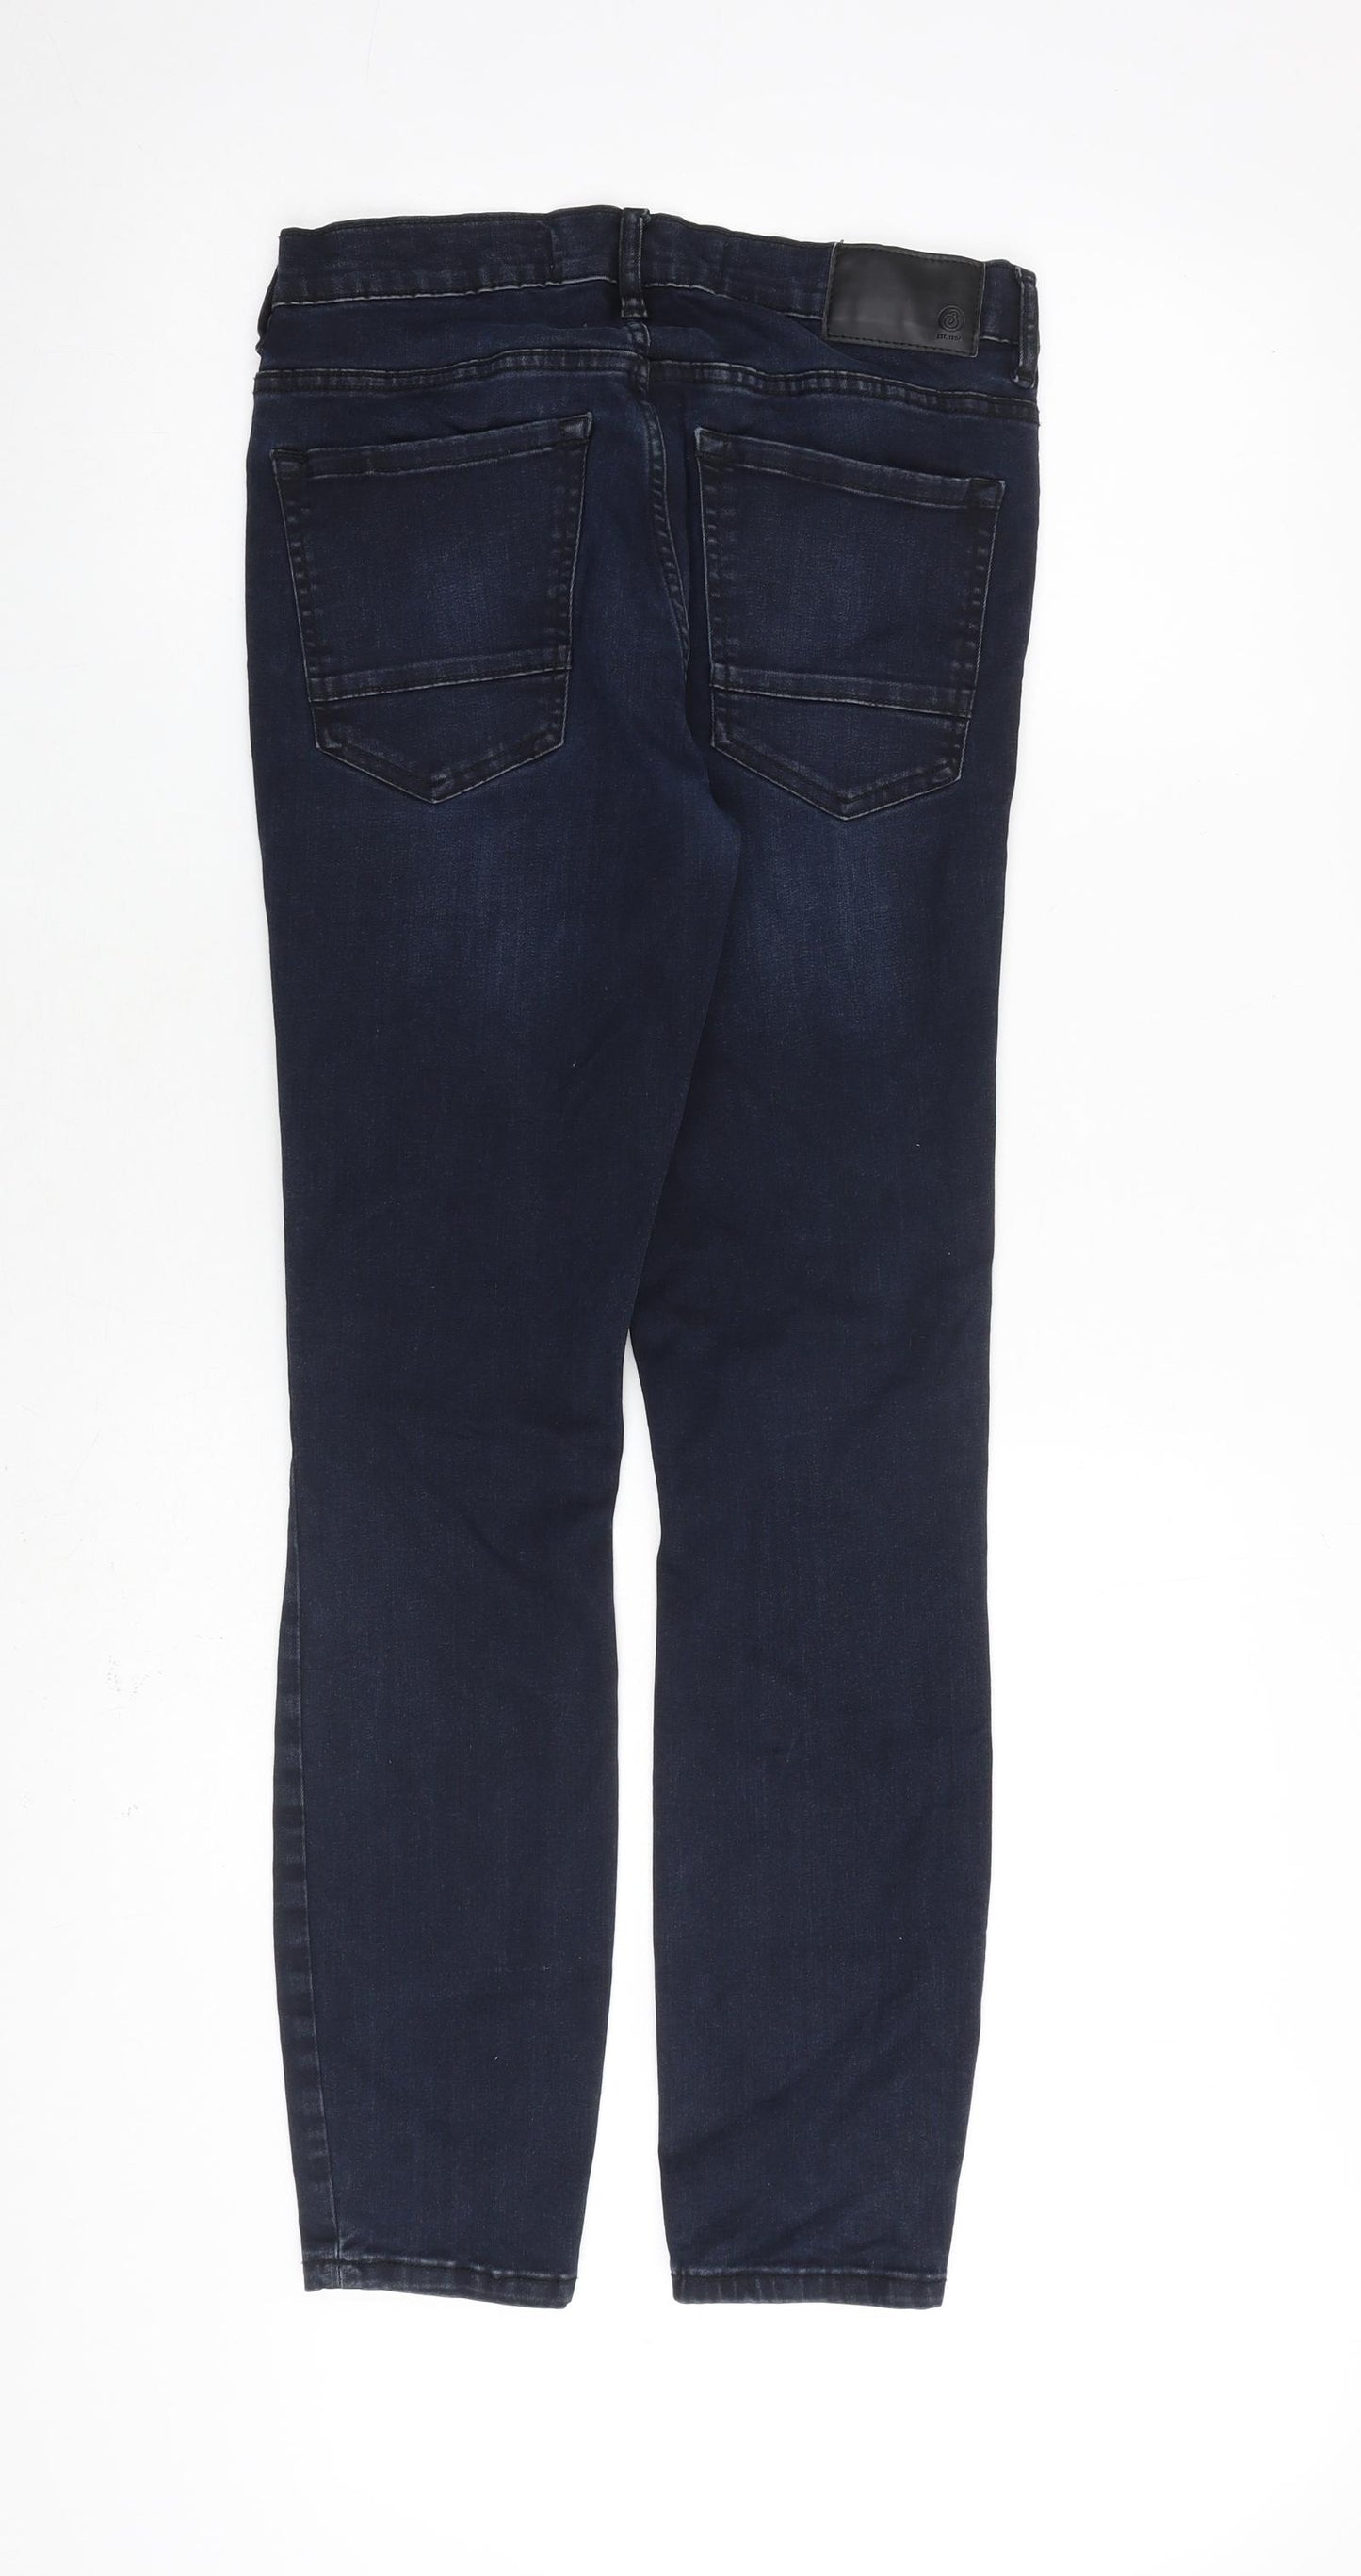 Burton Mens Blue Cotton Skinny Jeans Size 30 in L30 in Extra-Slim Zip